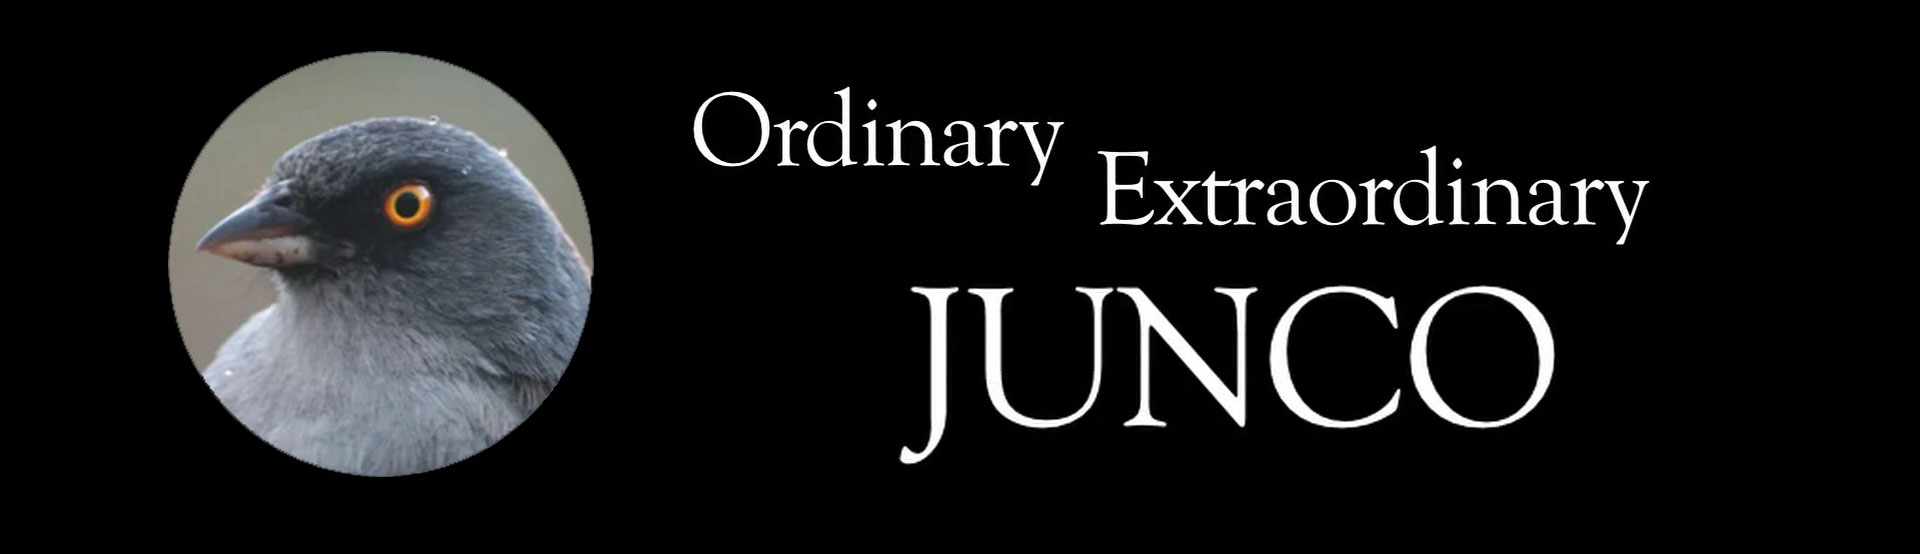 Ordinary Extraordinary Junco